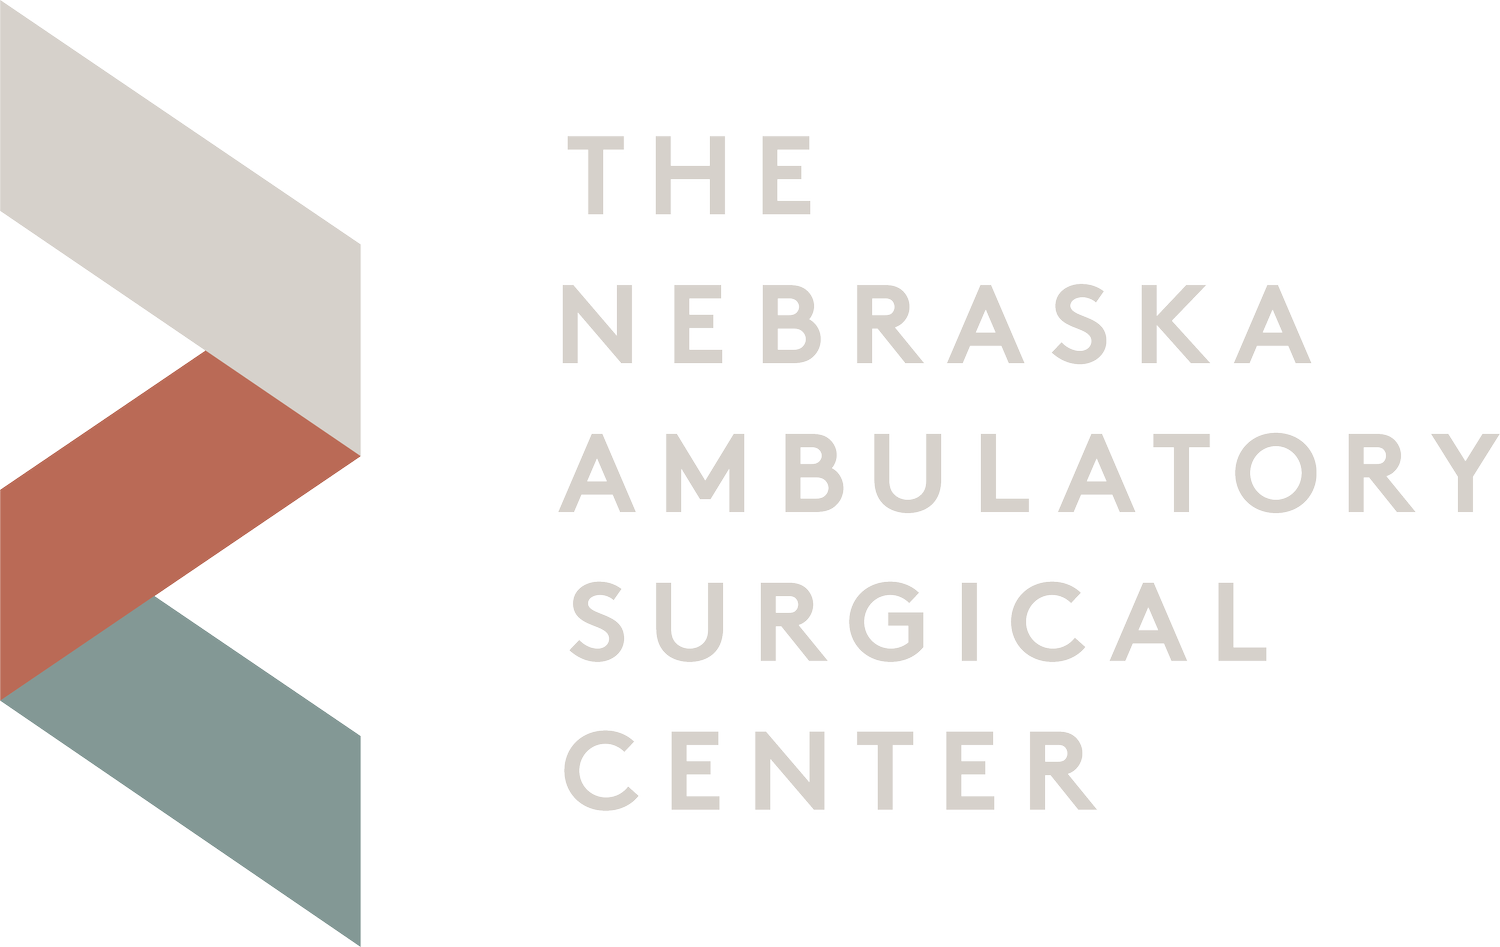 The Nebraska Ambulatory Surgical Center